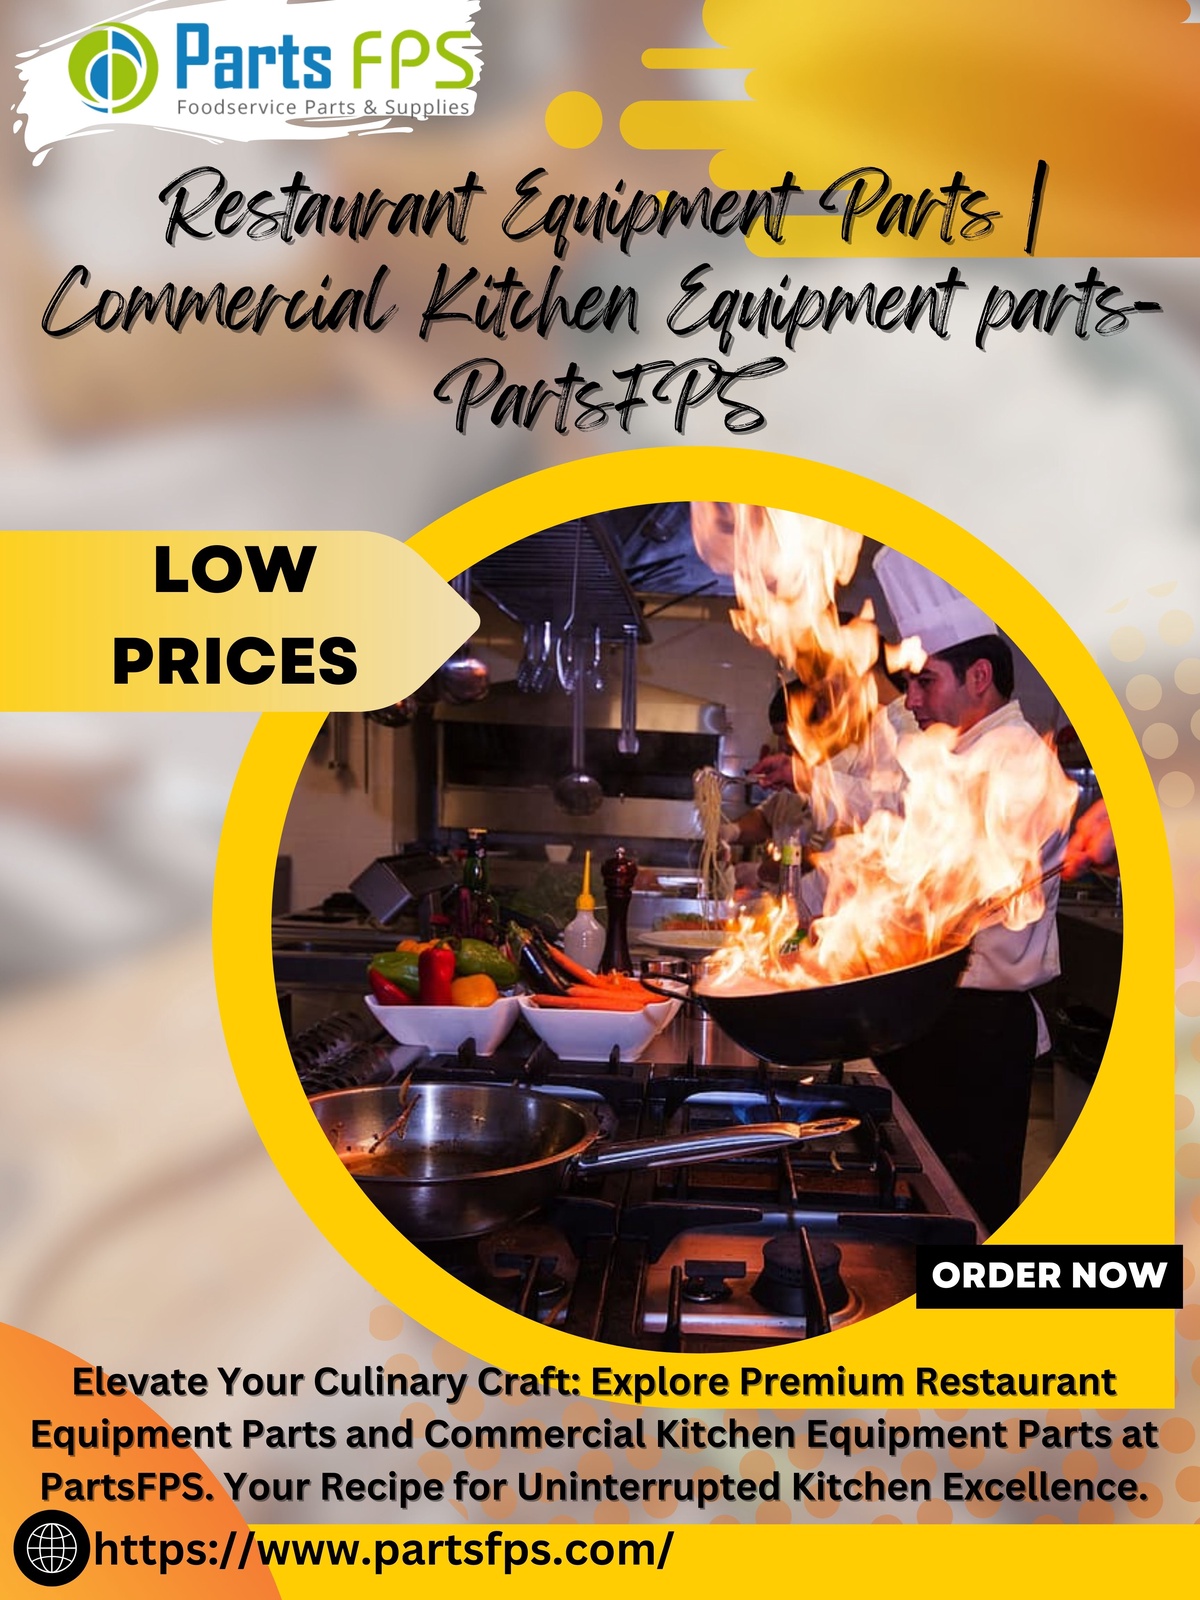 Restaurant Equipment Parts and Commercial kitchen Equipment parts- PartsFPS